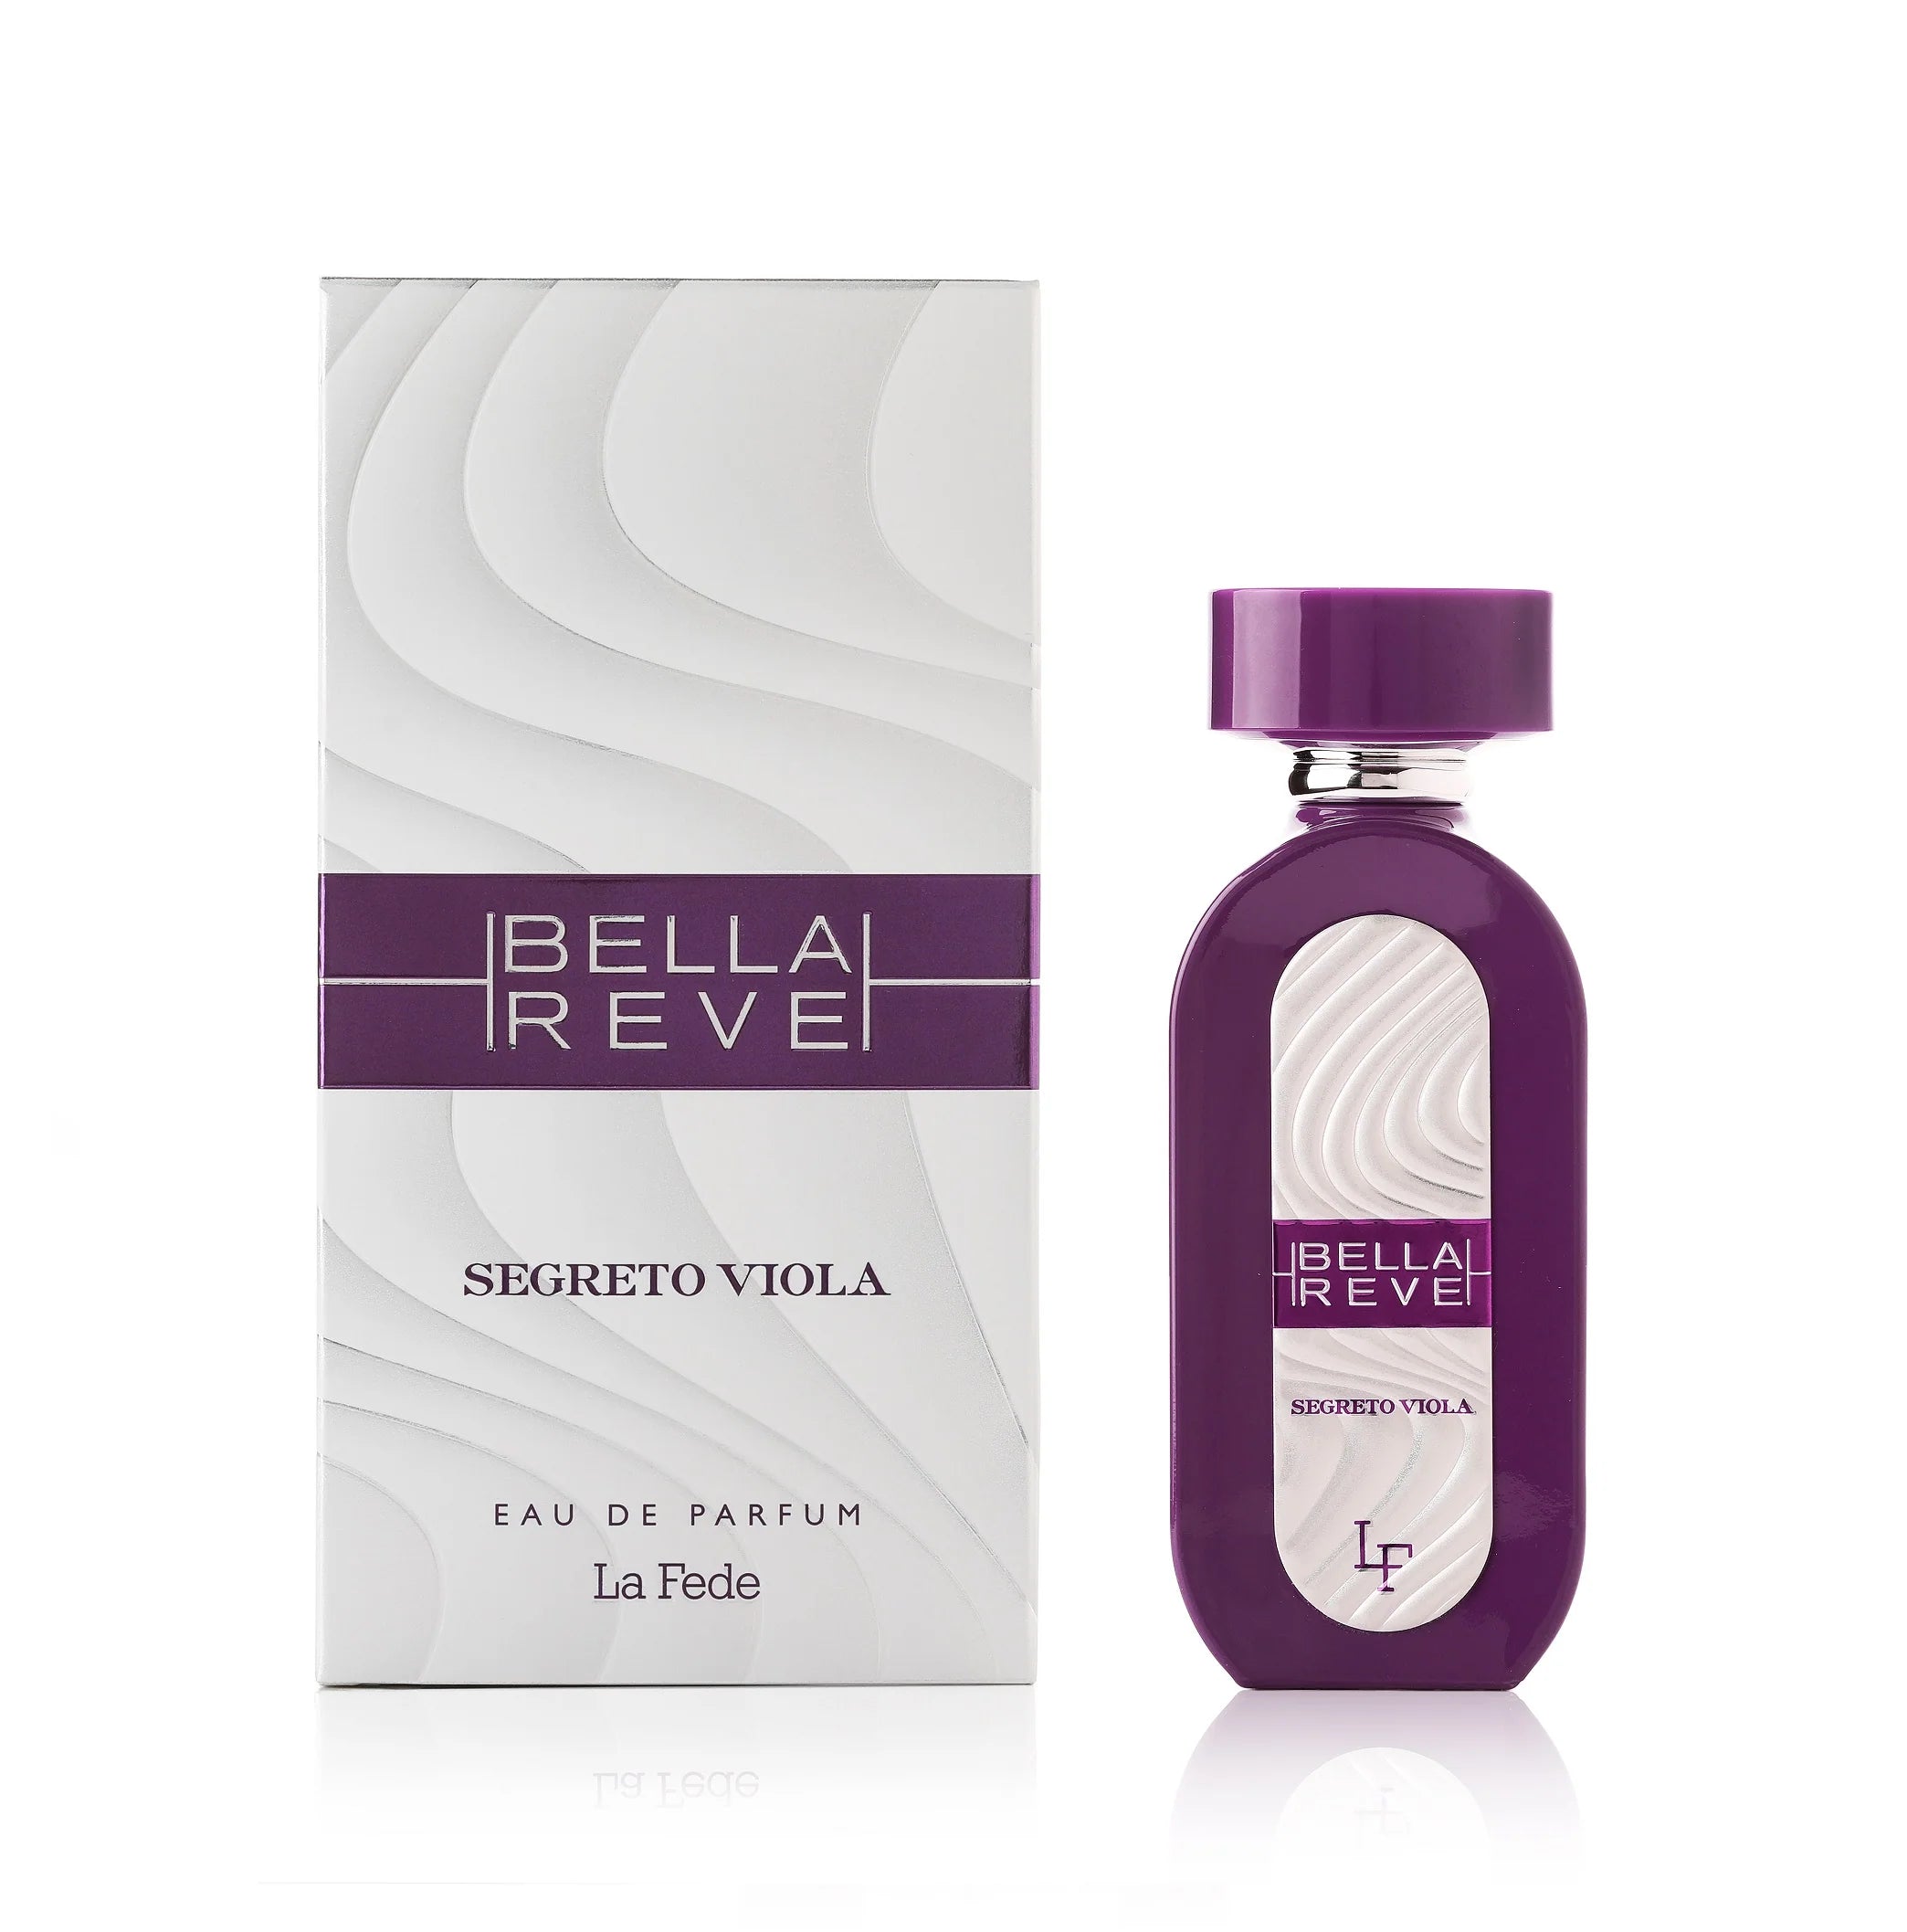 La Fede Belle Reve Segrato Viola EDP (100ml) spray perfume by Khadlaj | Khan El Khalili